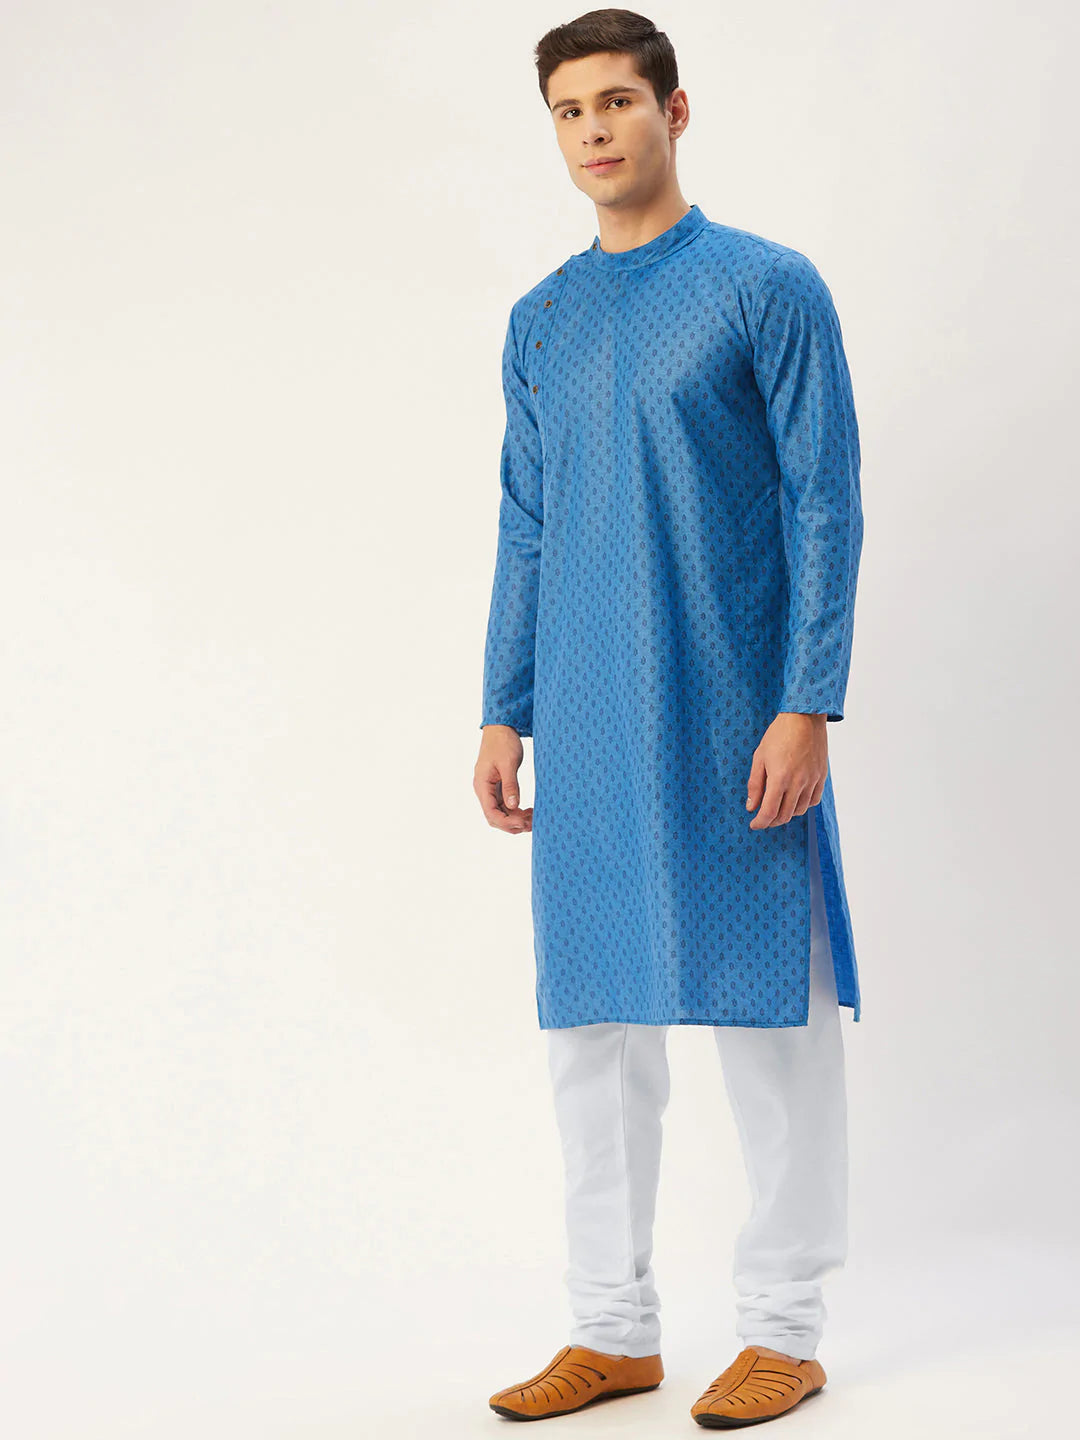 Jompers Men's Blue Cotton printed kurta Only( KO 652 Blue )